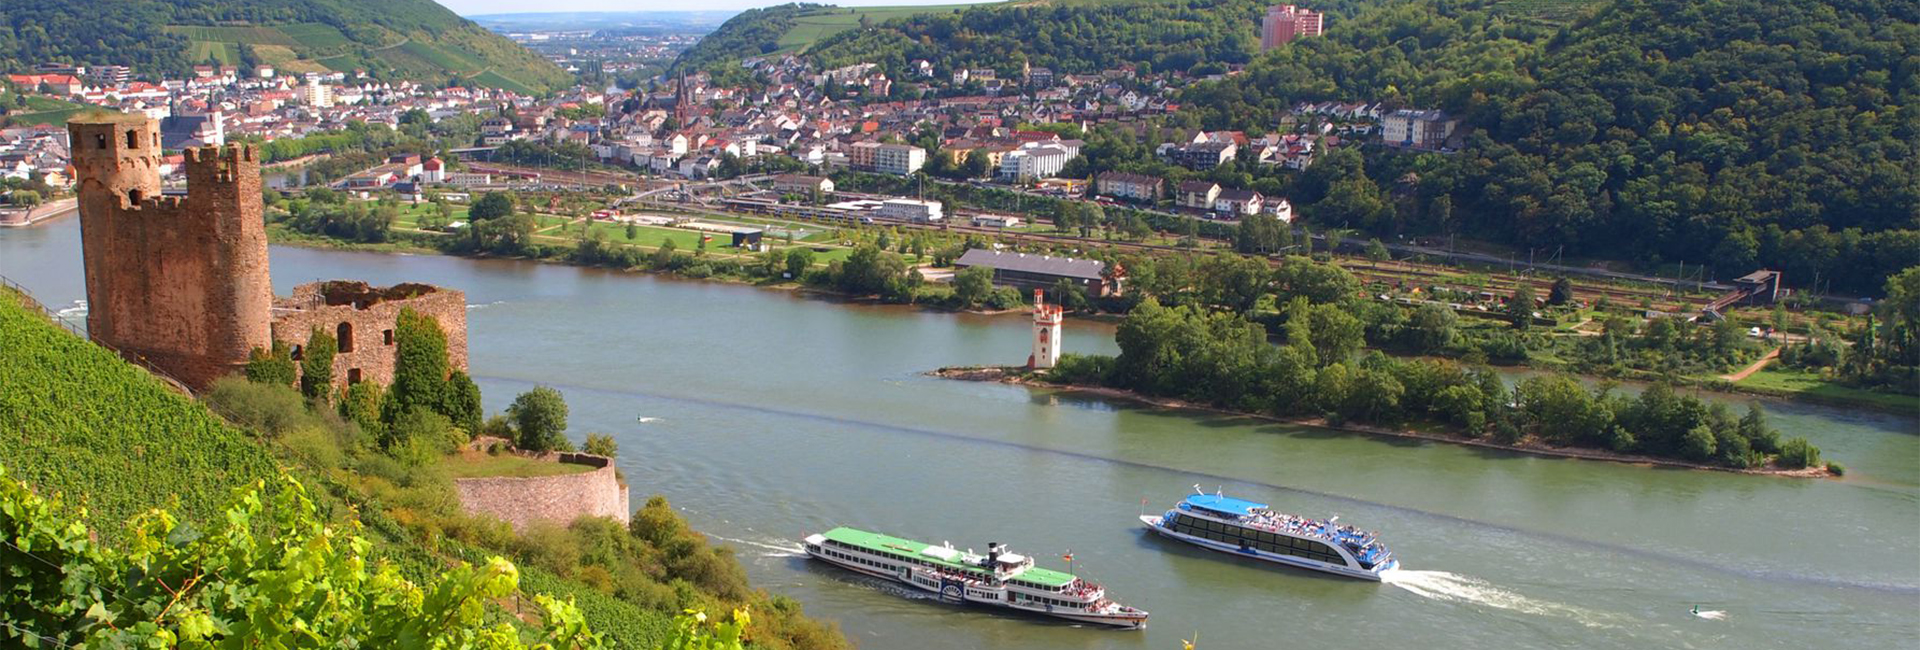 2019: 6-dages all incl. tur til Rüdesheim m. Rhinen i Flammer show